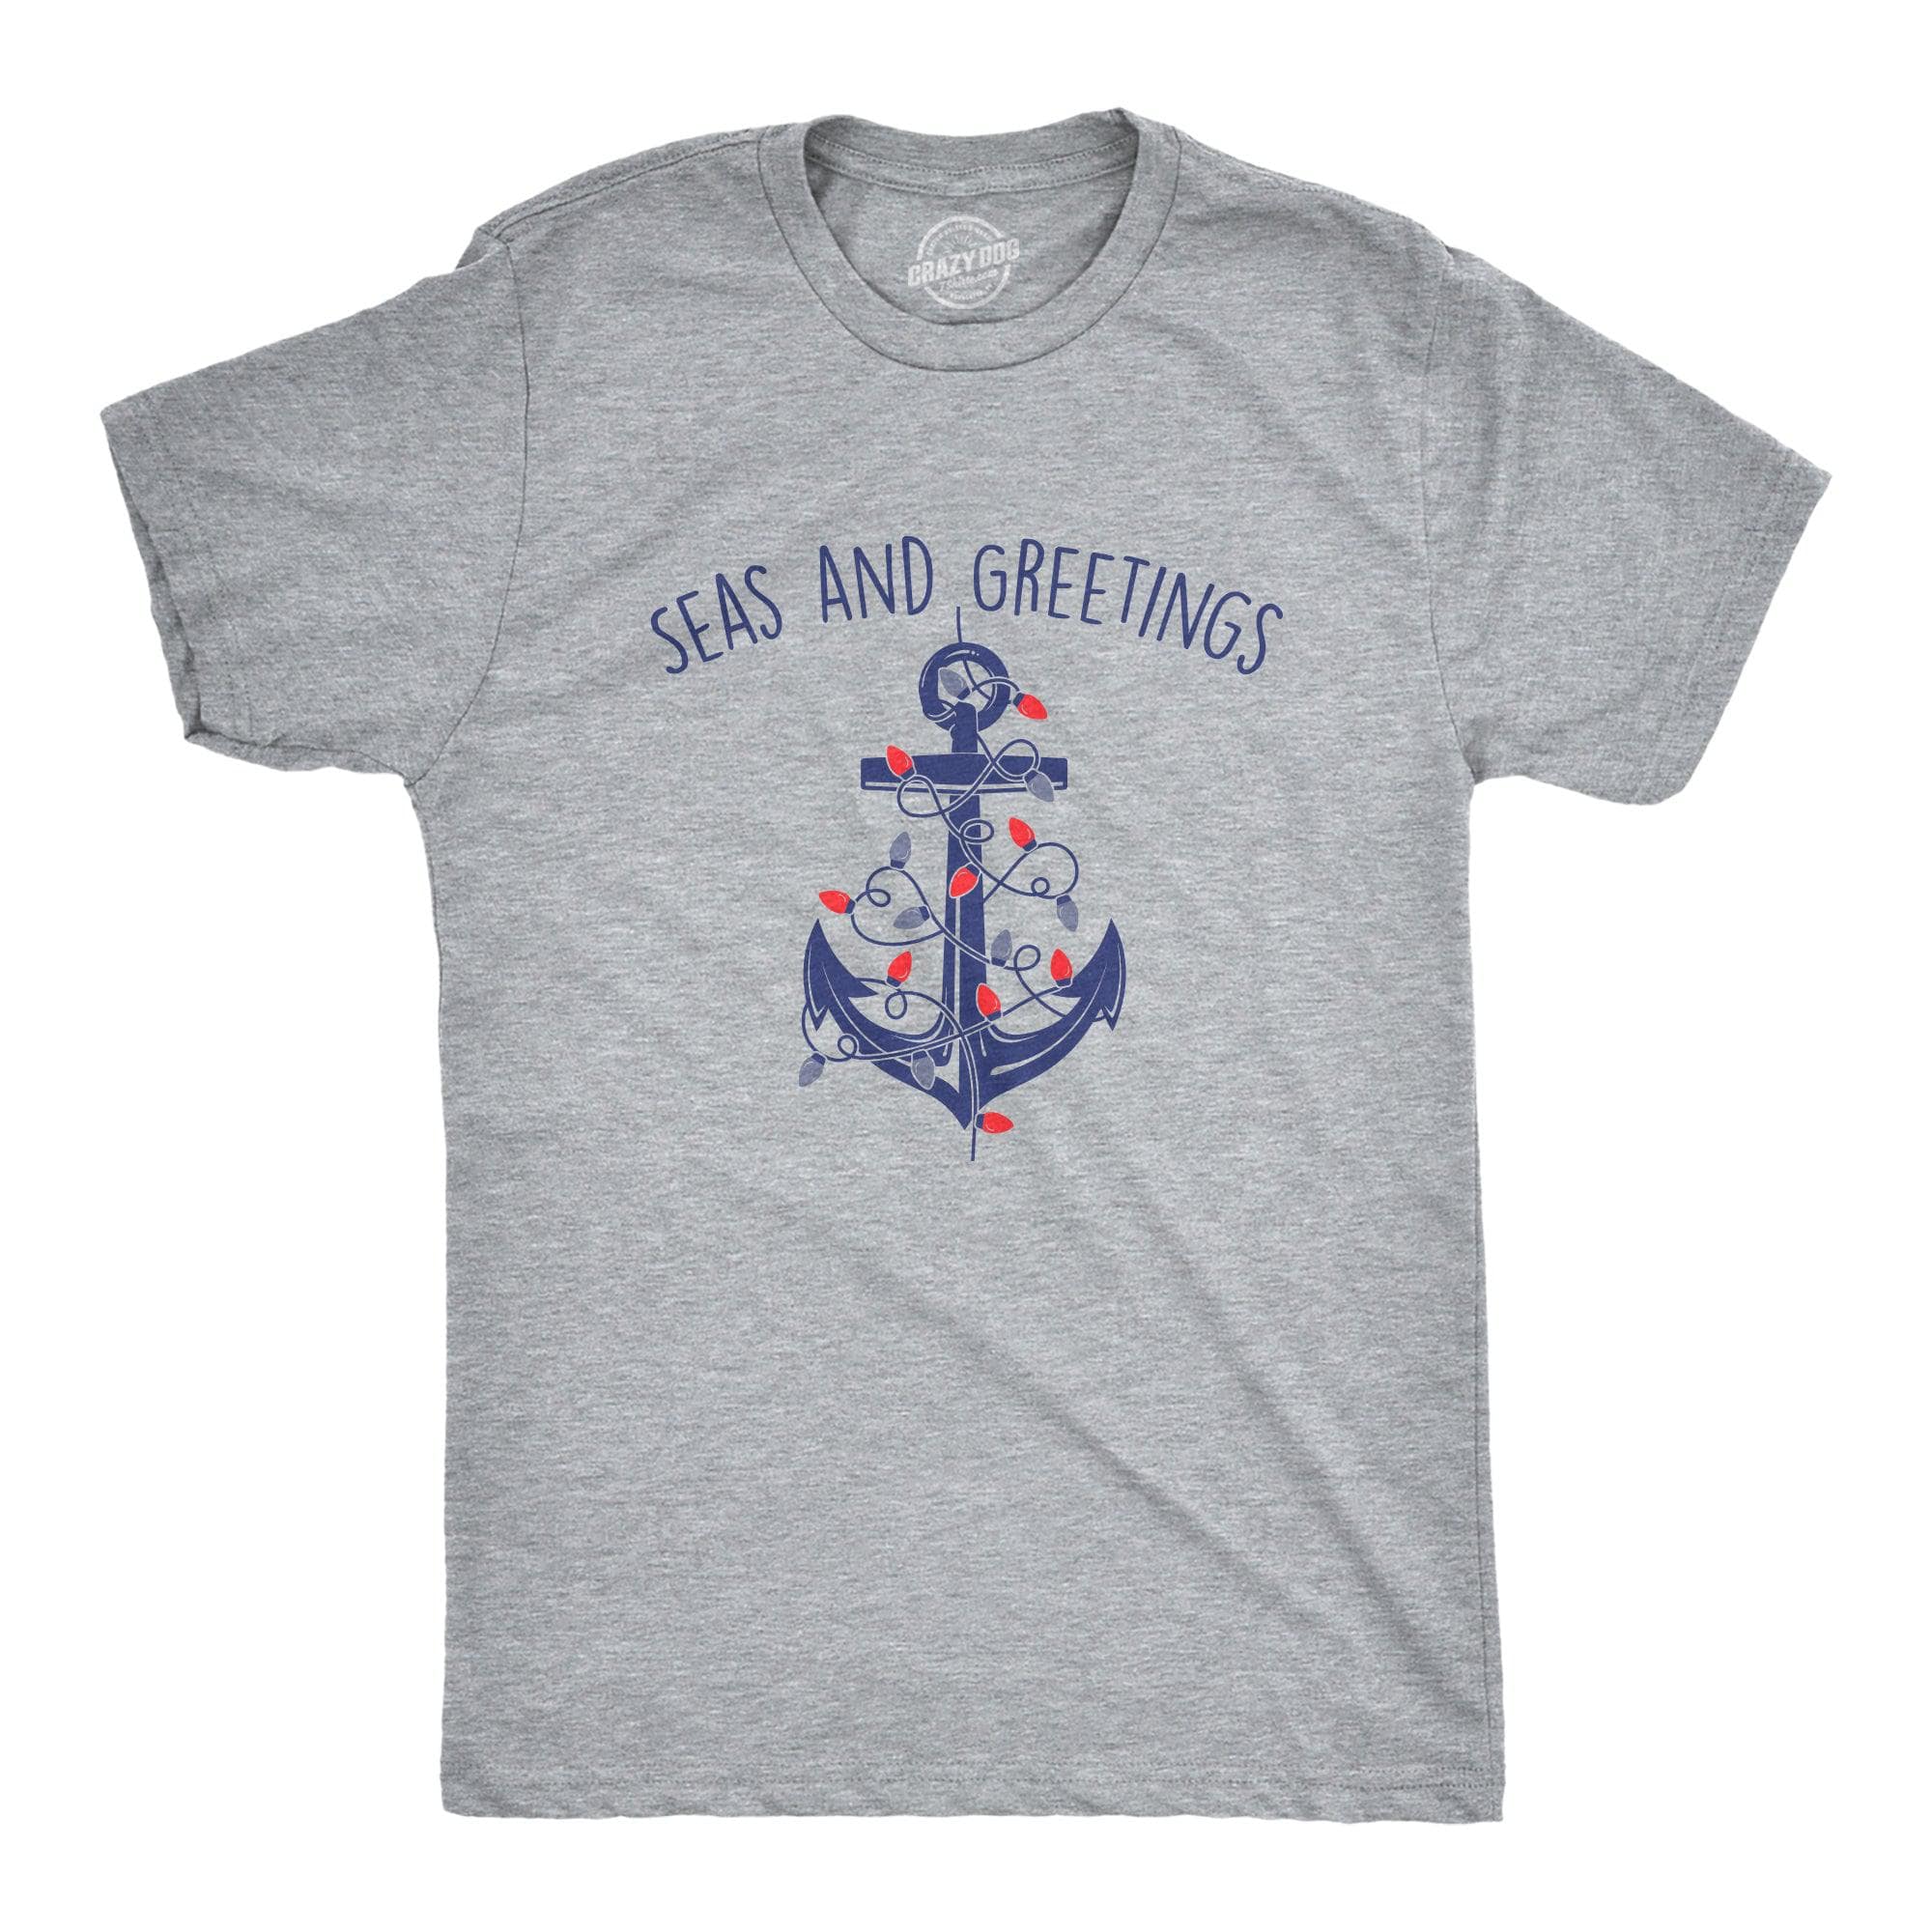 Seas And Greetings Men's Tshirt  -  Crazy Dog T-Shirts